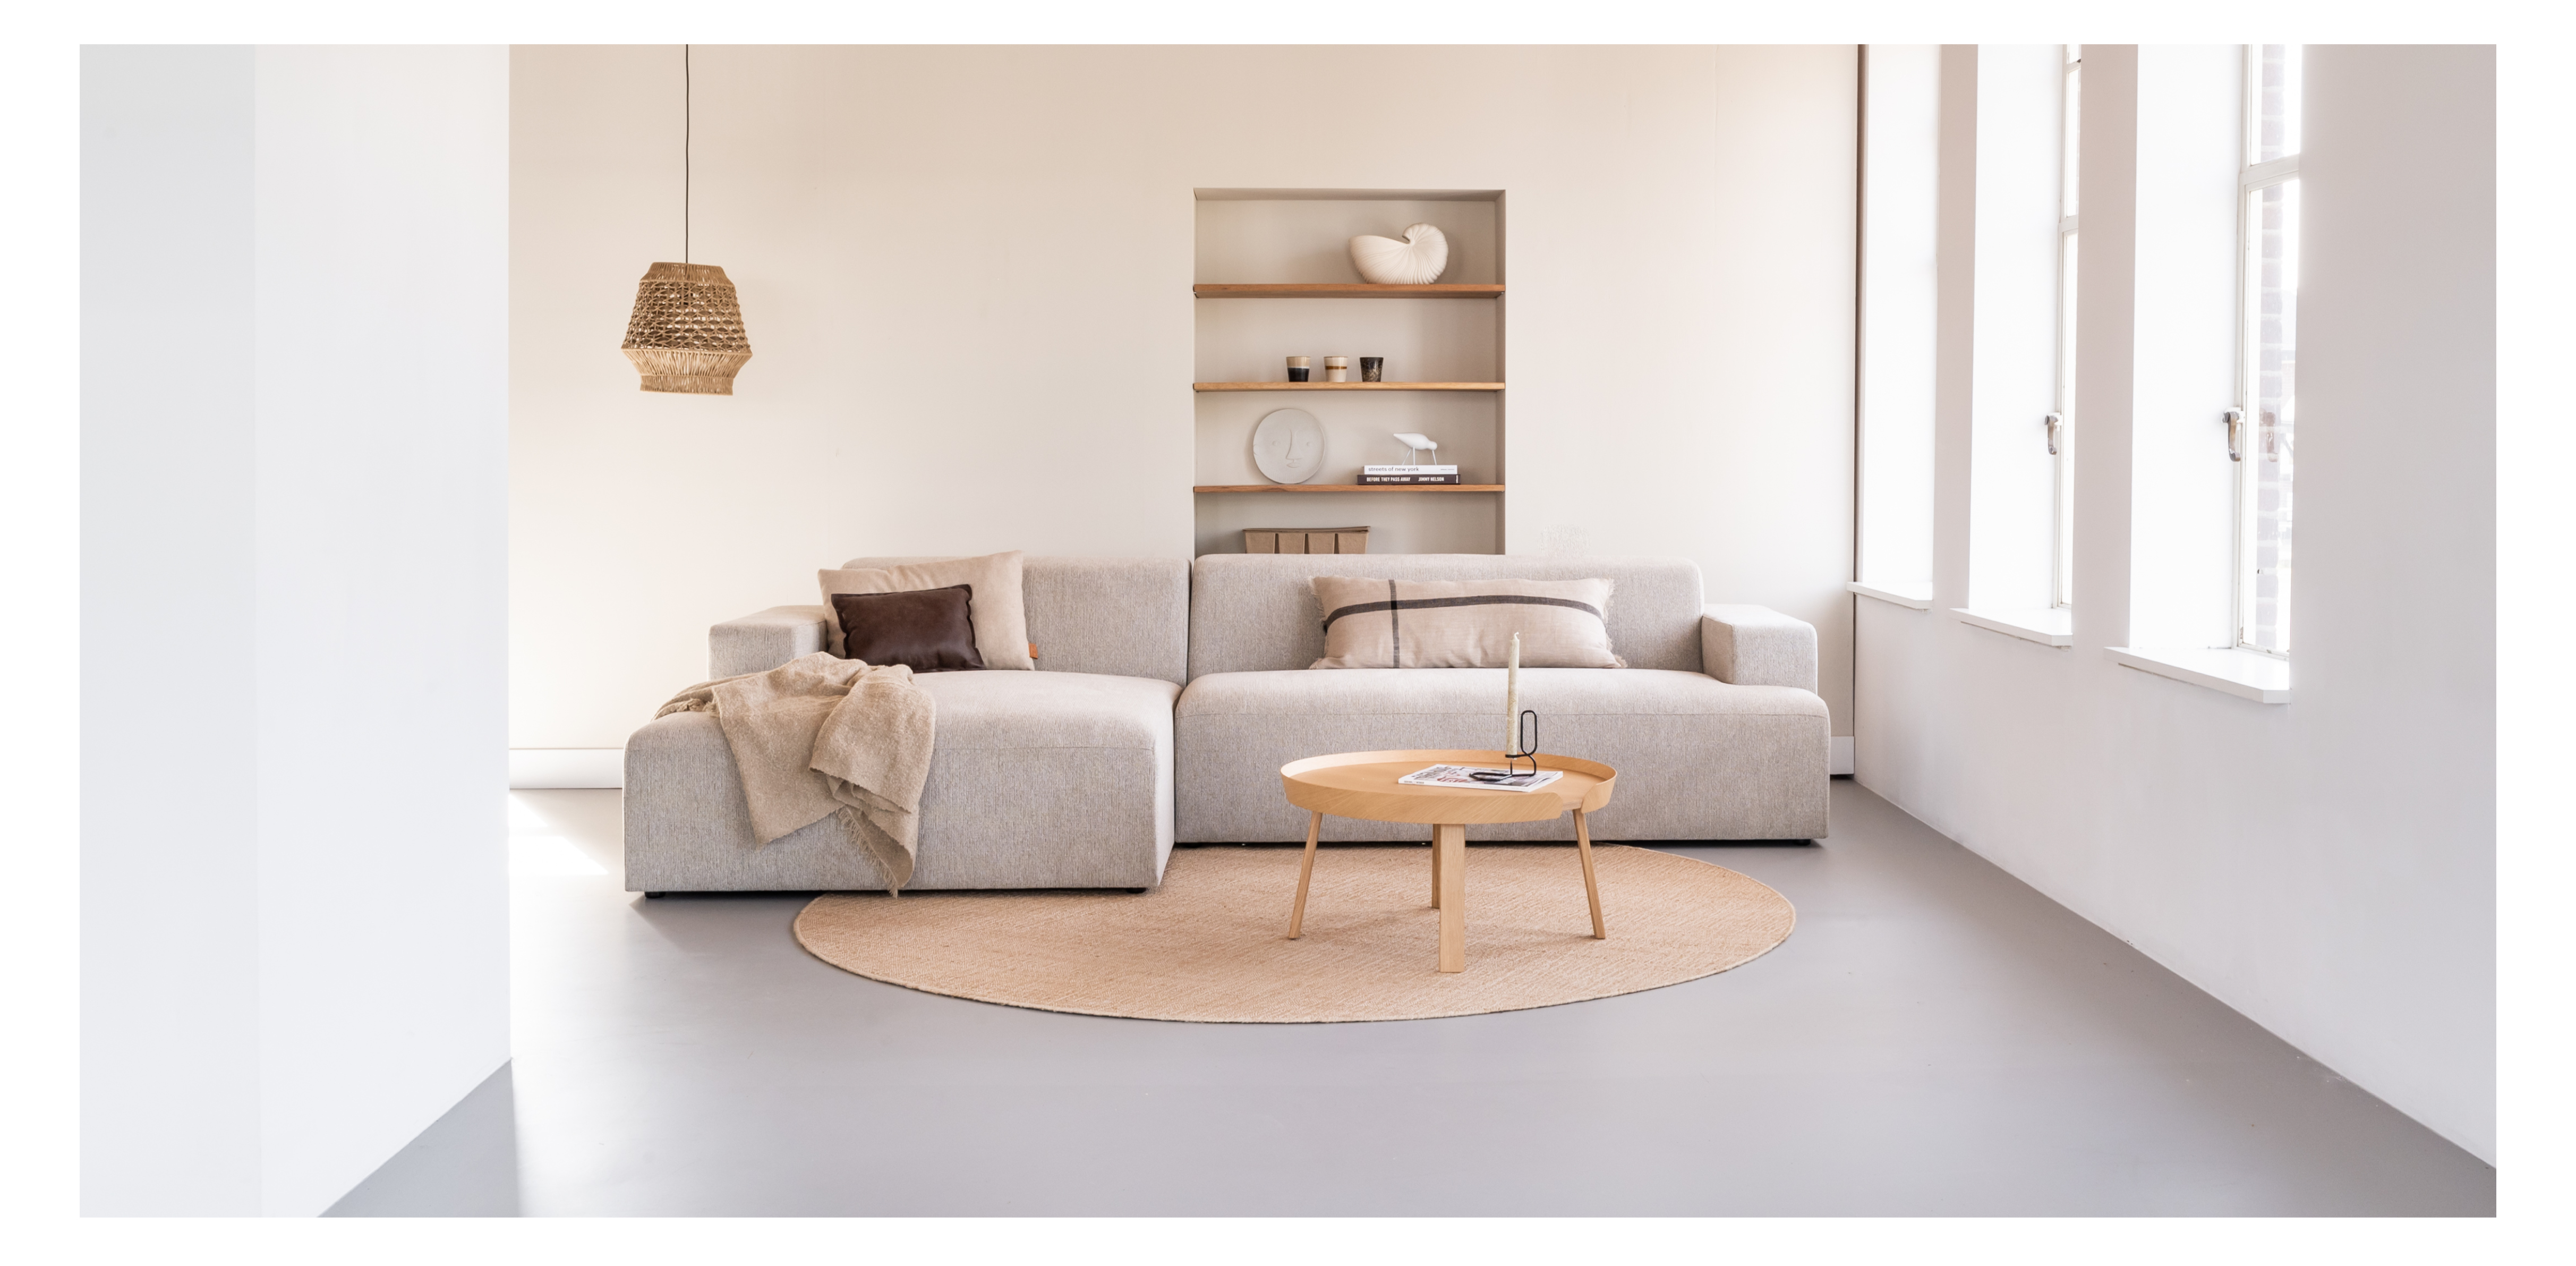 da ist es: unser neues design-sofa moa › inspiration ›sidde